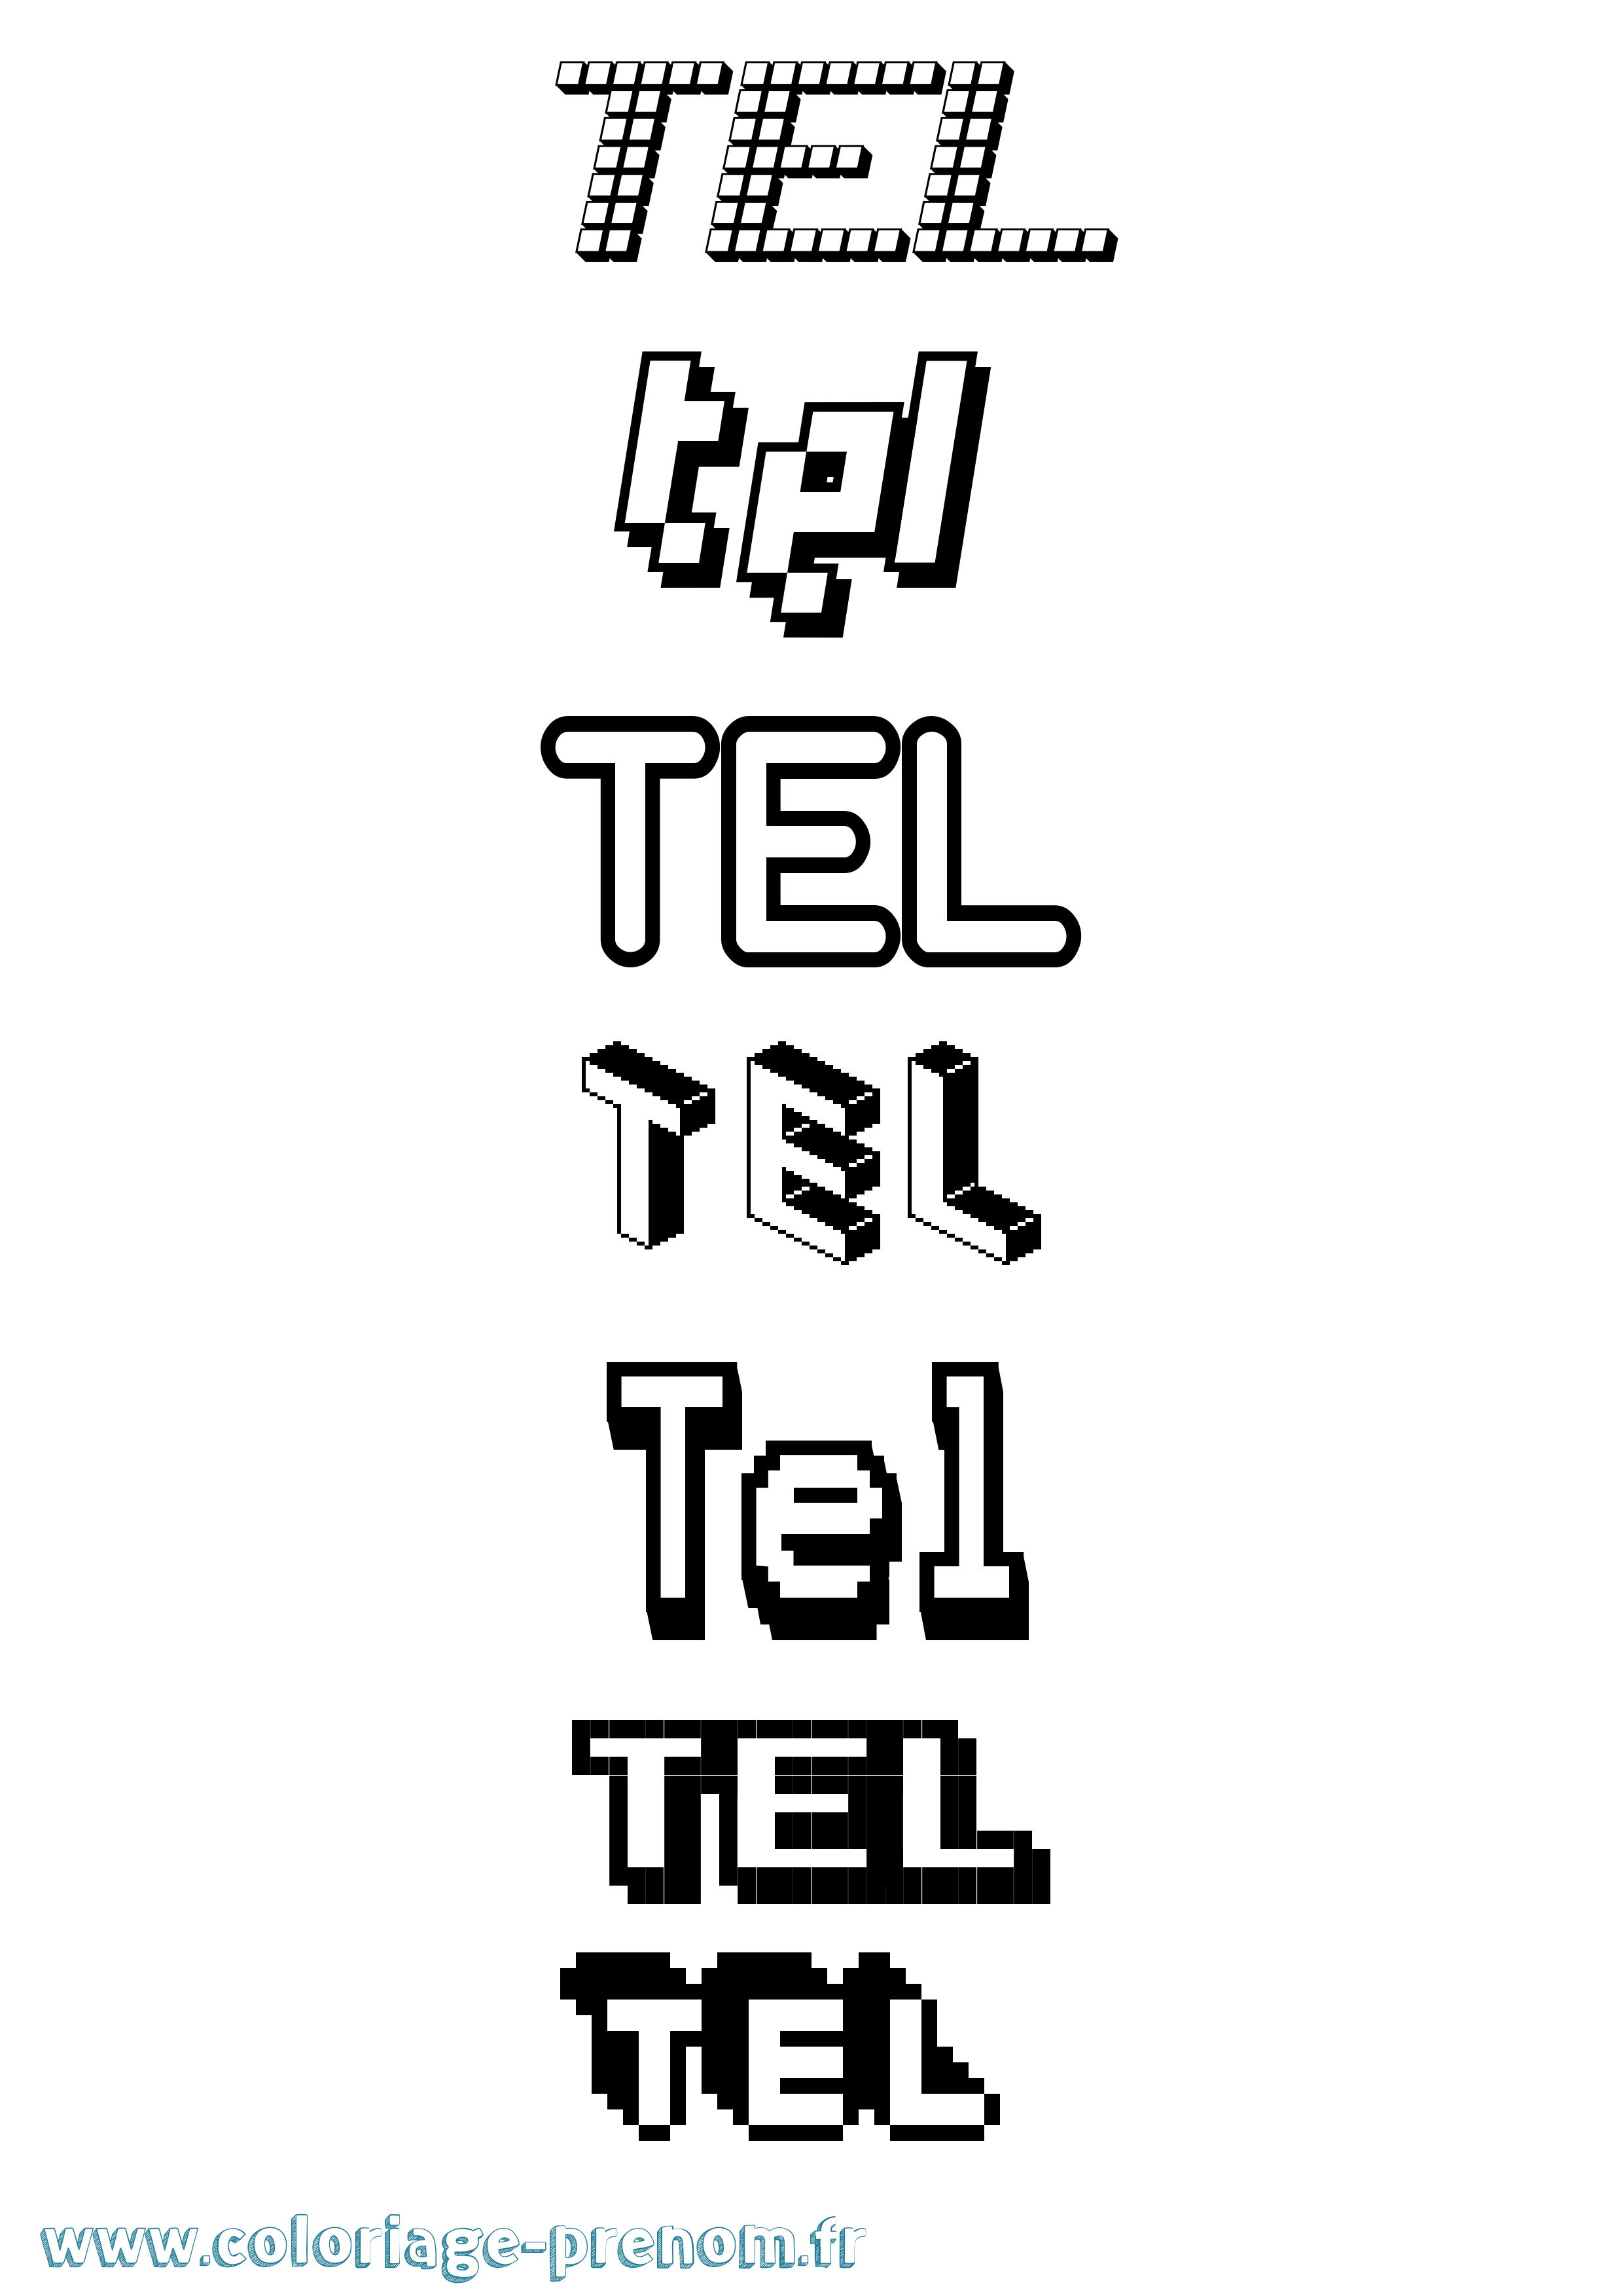 Coloriage prénom Tel Pixel